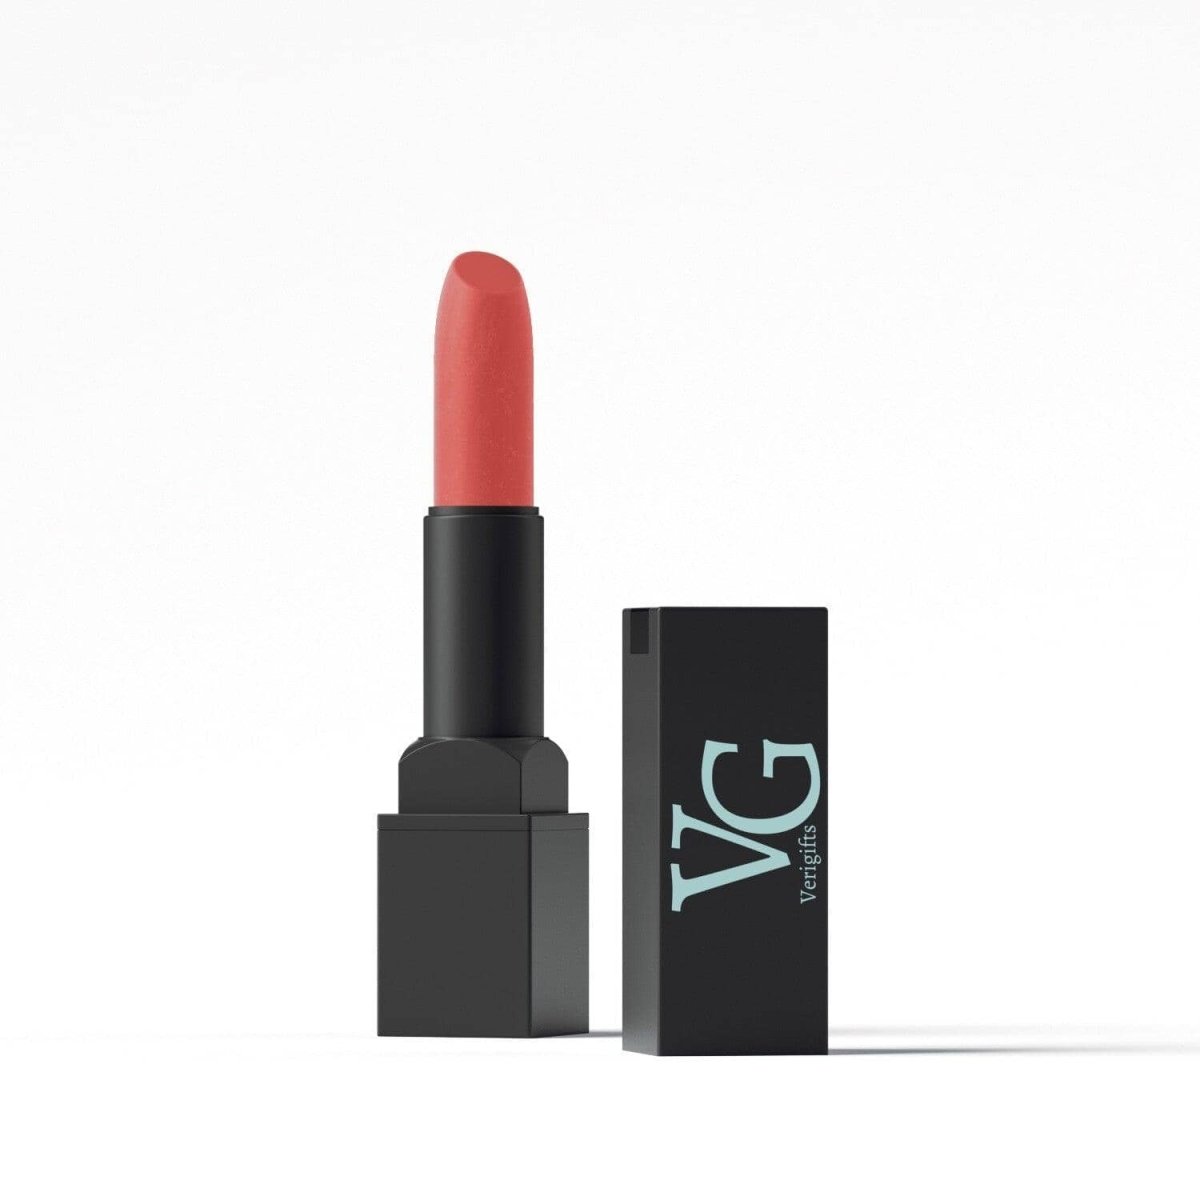 Choco-Raspberry Lipstick with elegant black packaging